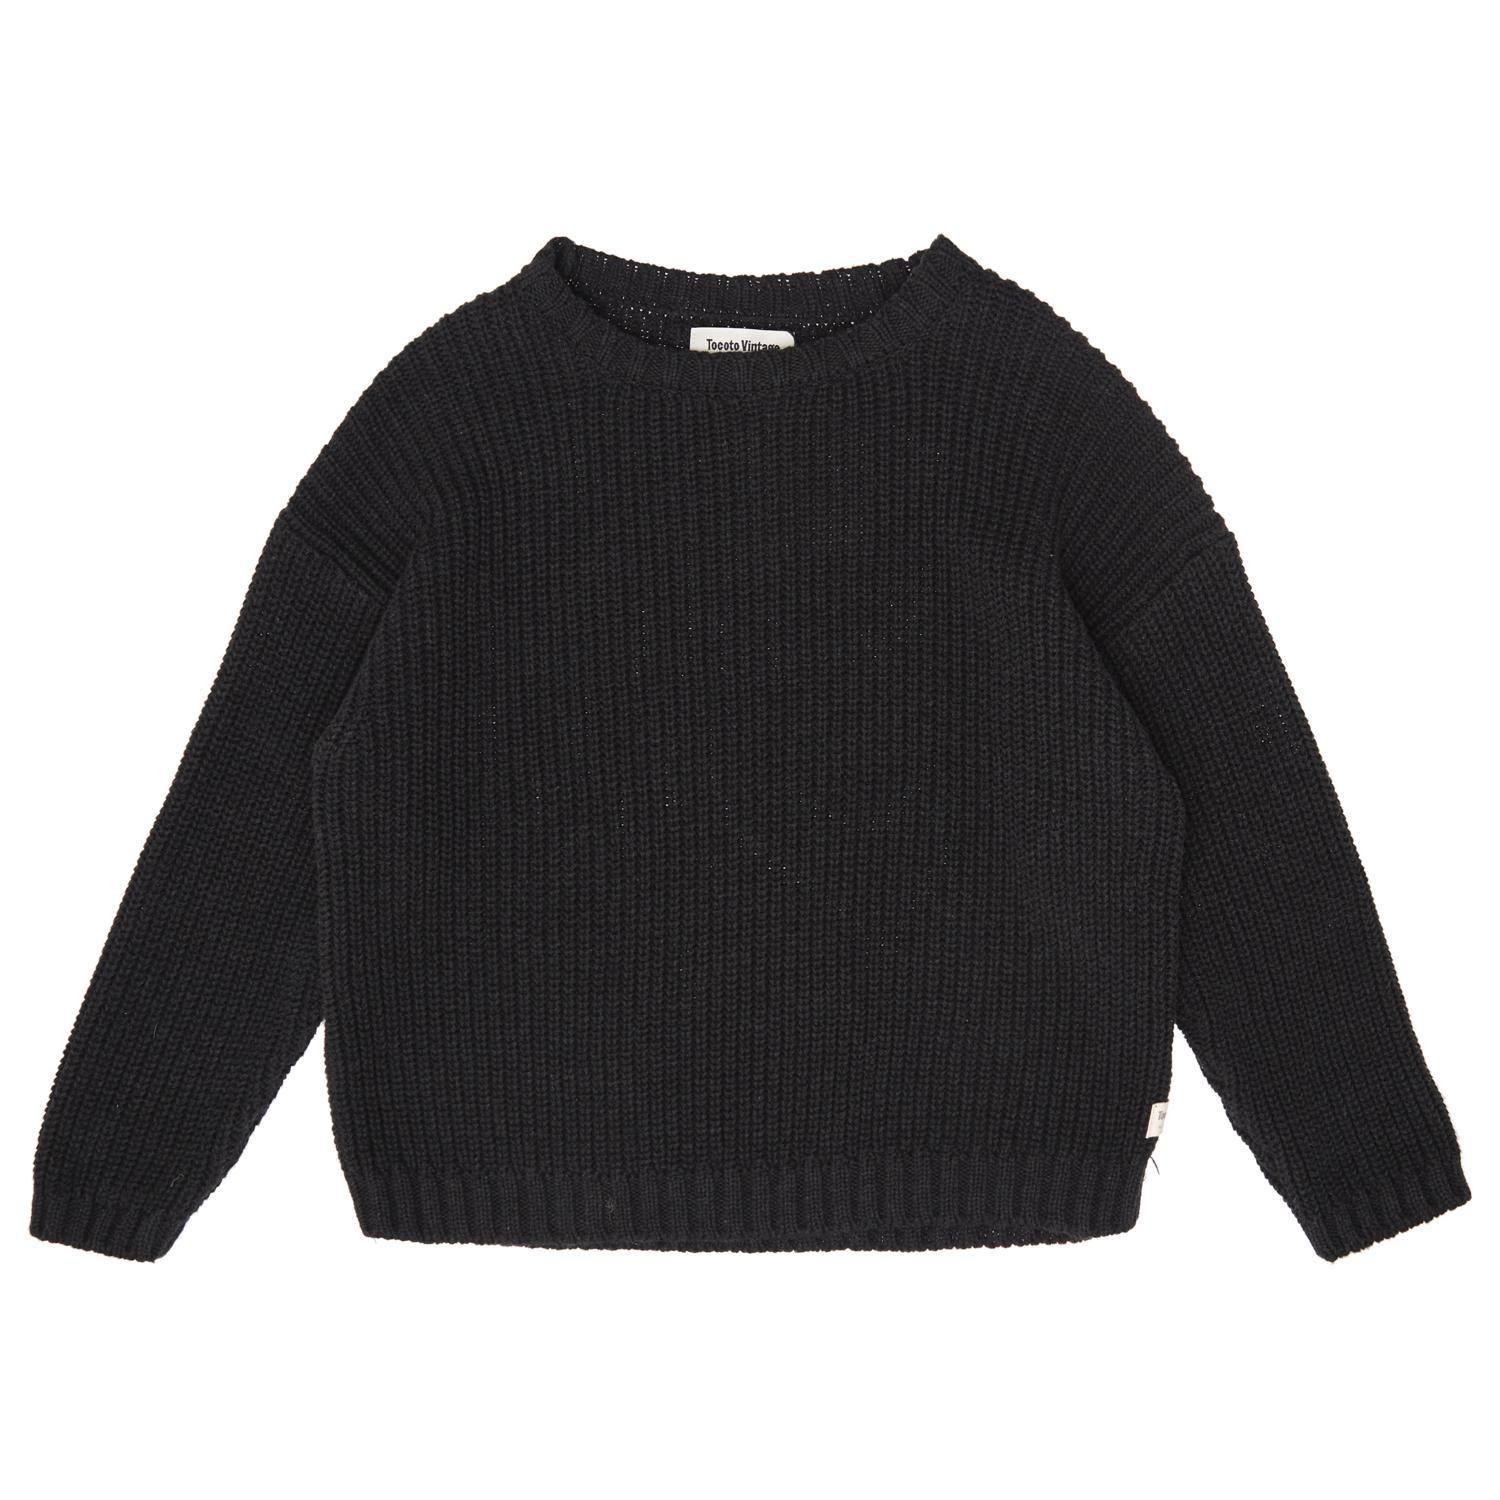 Kid pearl knit basic sweater